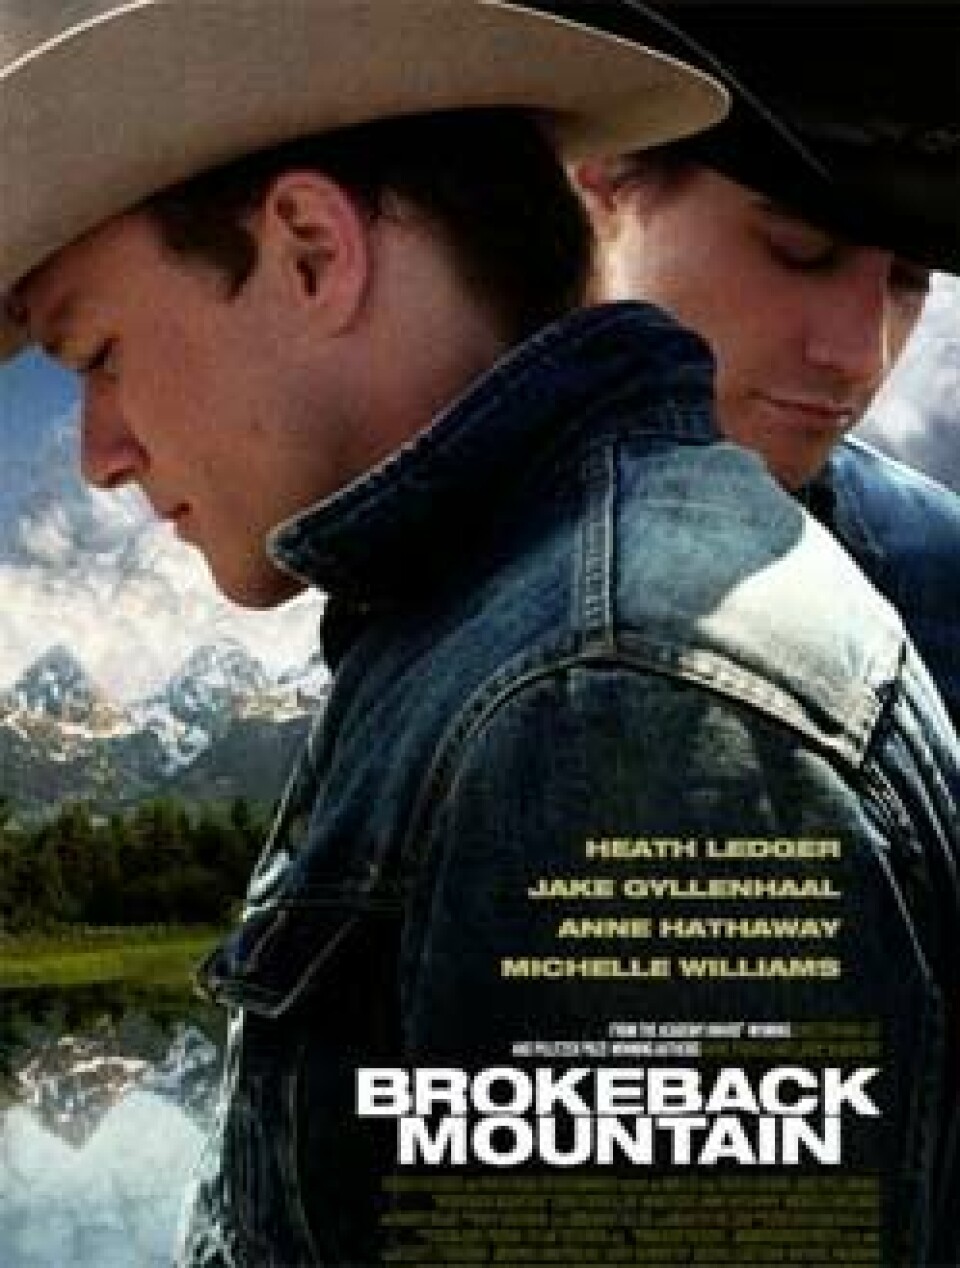 Brokeback Mountain, plakat fra filmen. (Foto/Copyright: Sandrew Metronome Norge)